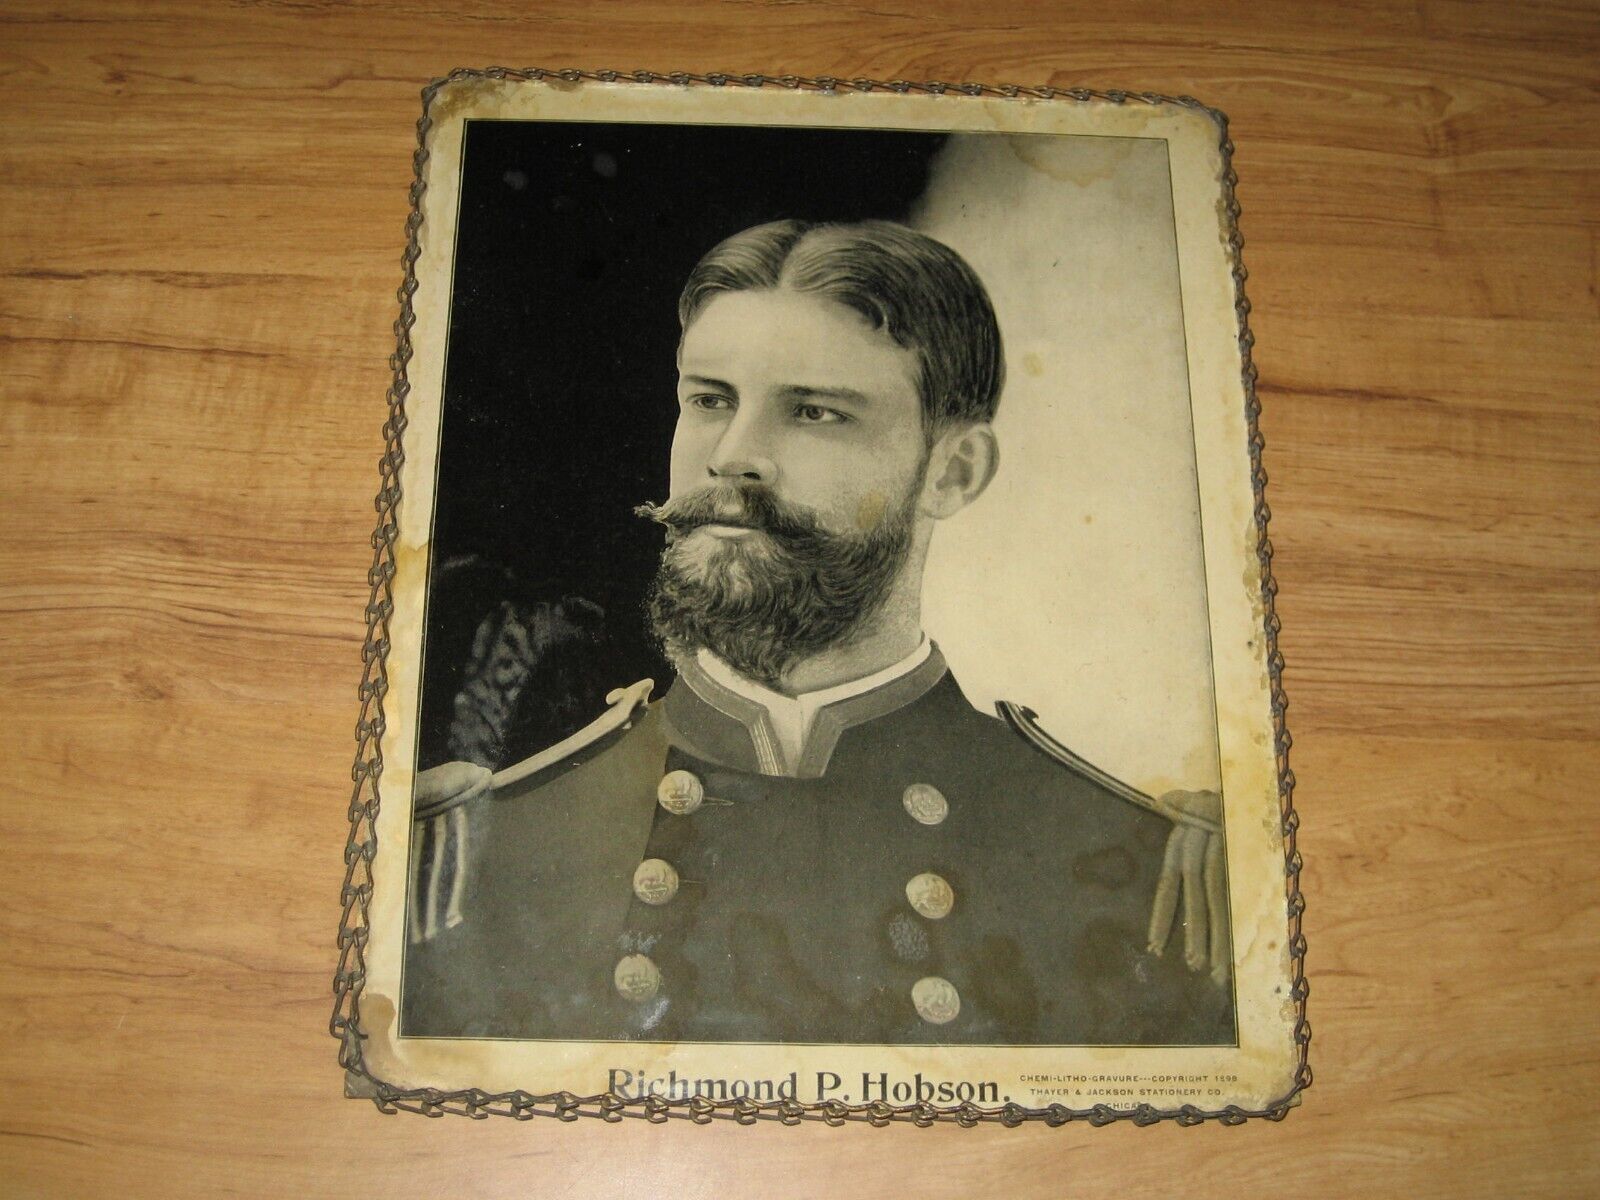 1898 Chain Picture Lithograph-Admiral Richmond P. Hobson-Spanish American War